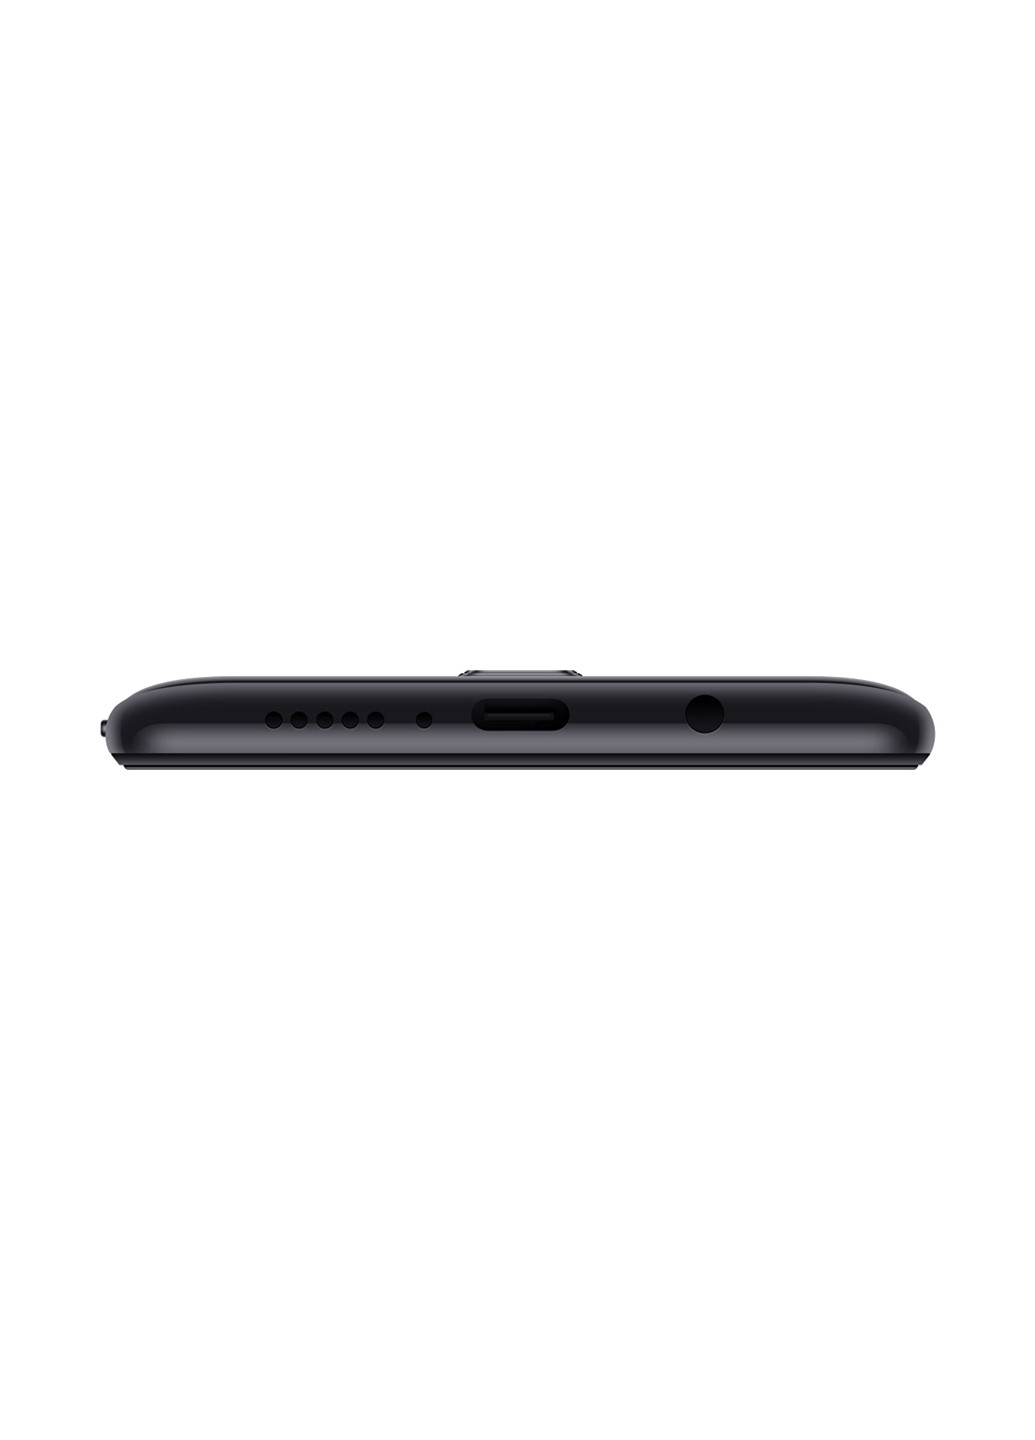 Смартфон Redmi Note 8 Pro 6 / 64GB Grey Xiaomi redmi note 8 pro 6/64gb grey (155433452)